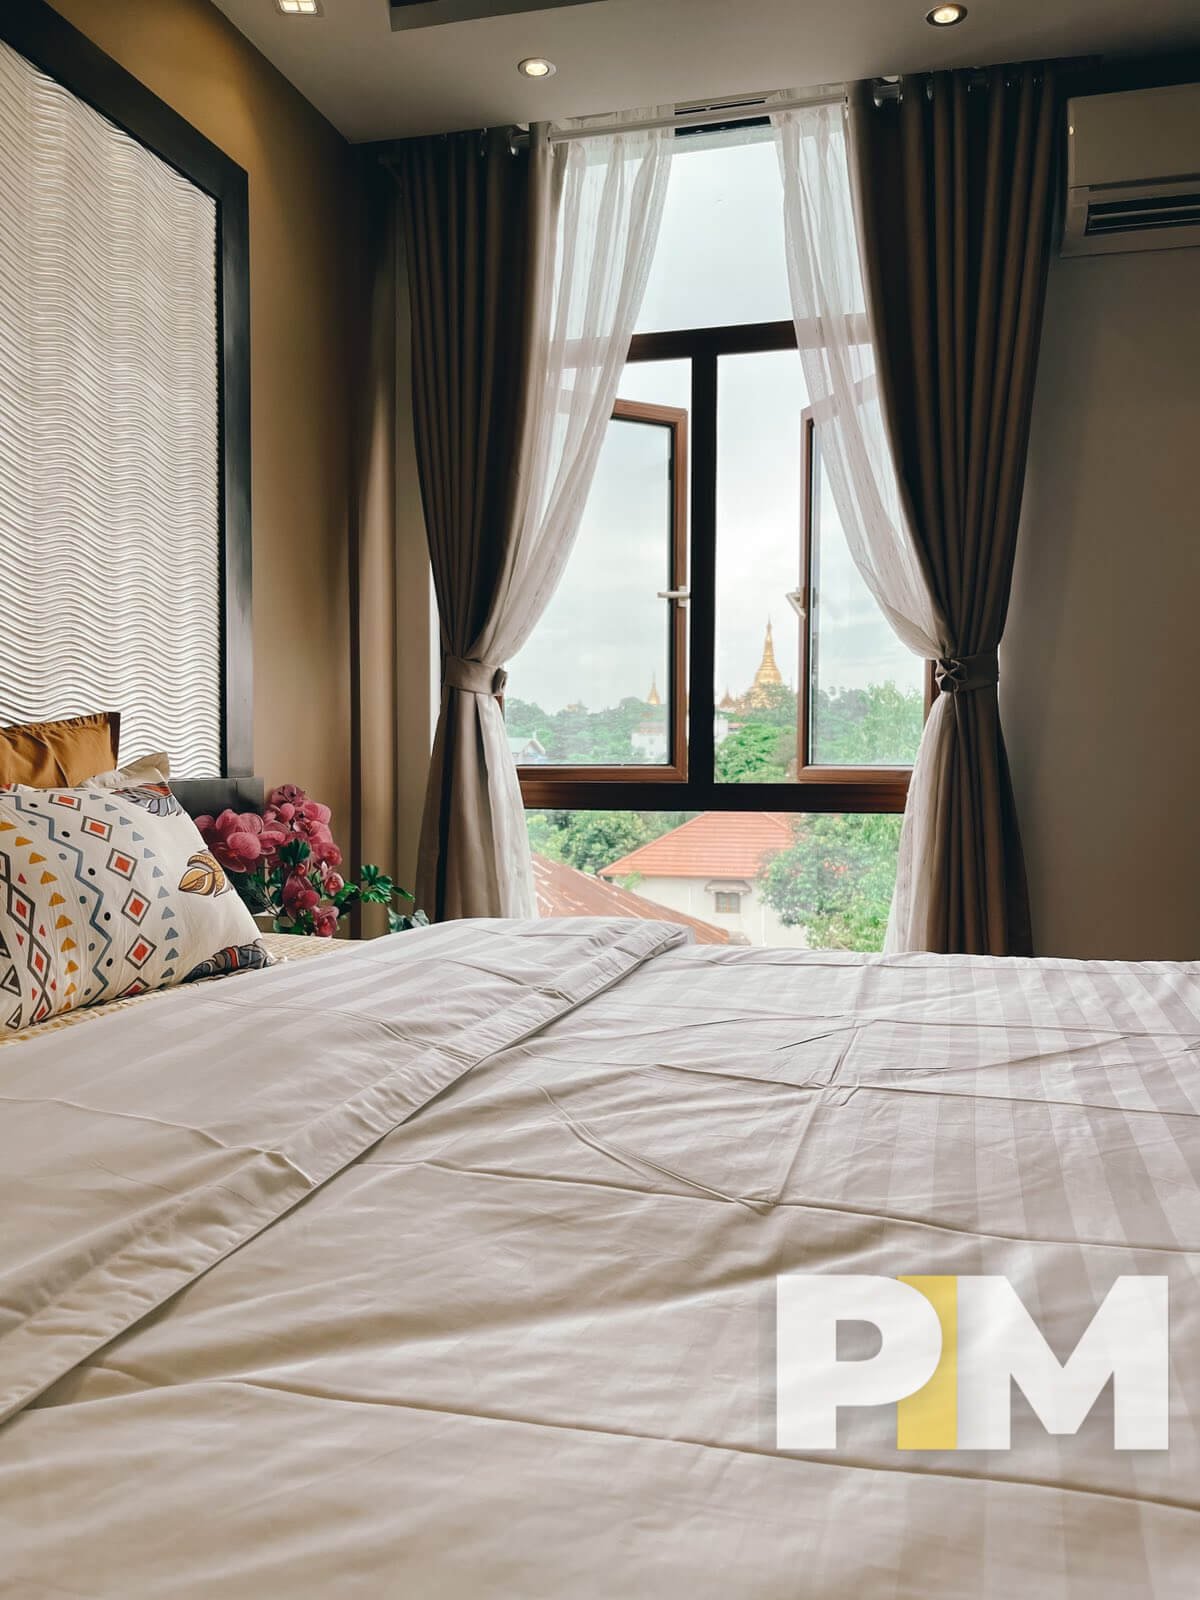 Bedroom with window - Real Estate in Myanmar